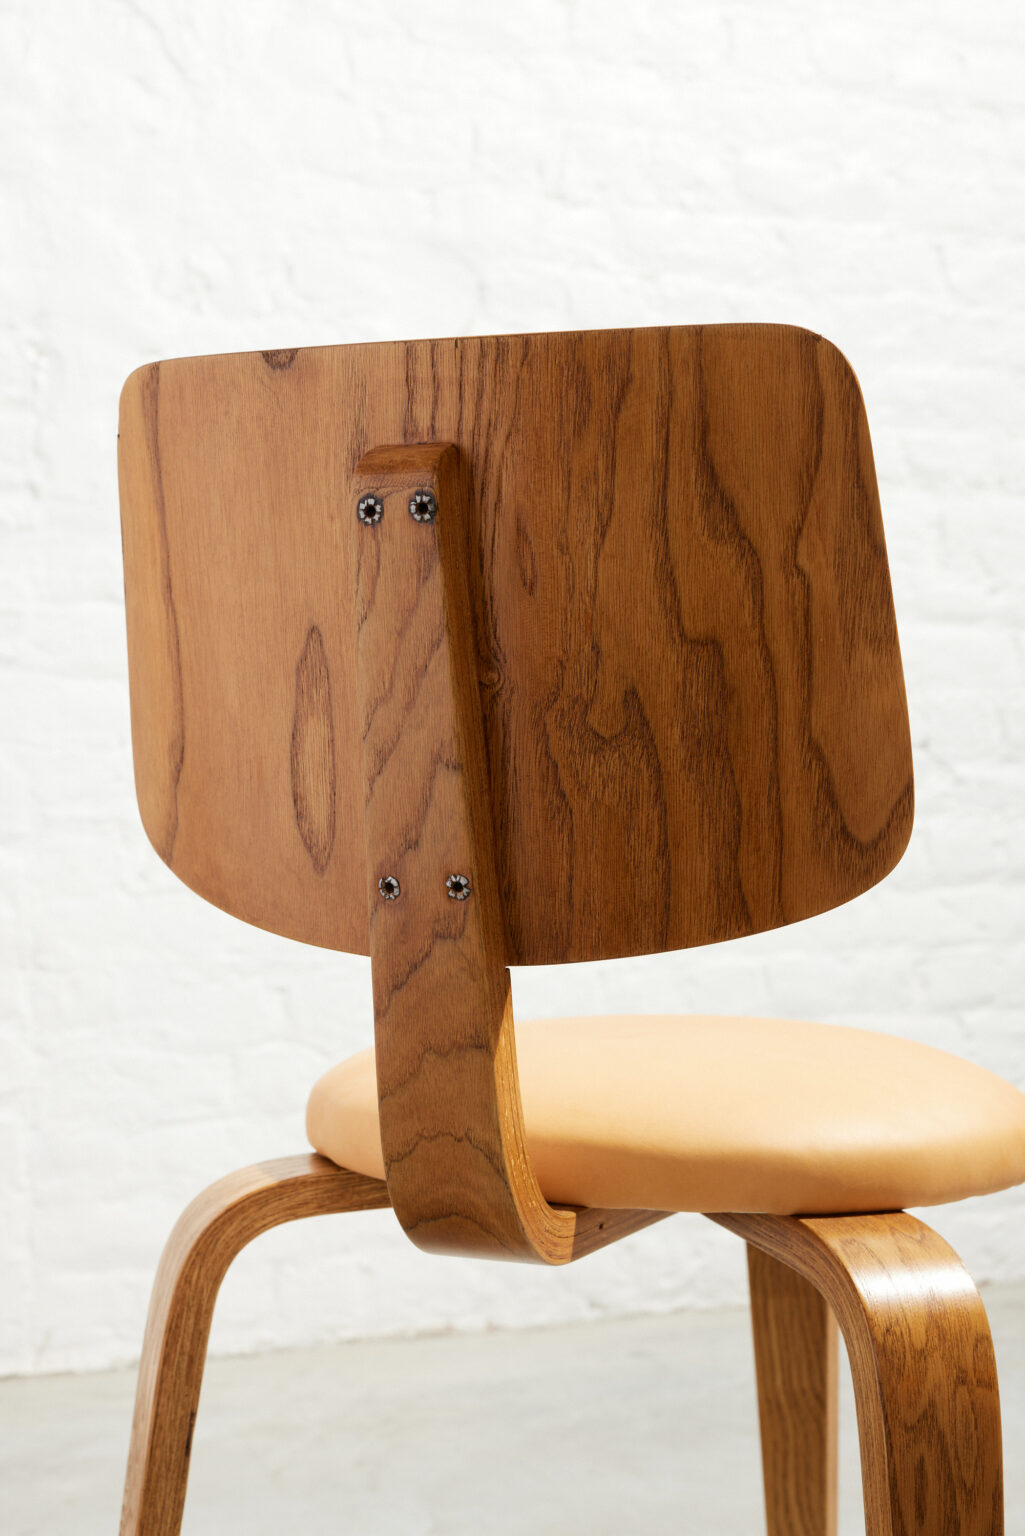 Rare plywood tripod chair by Menovich Wouda